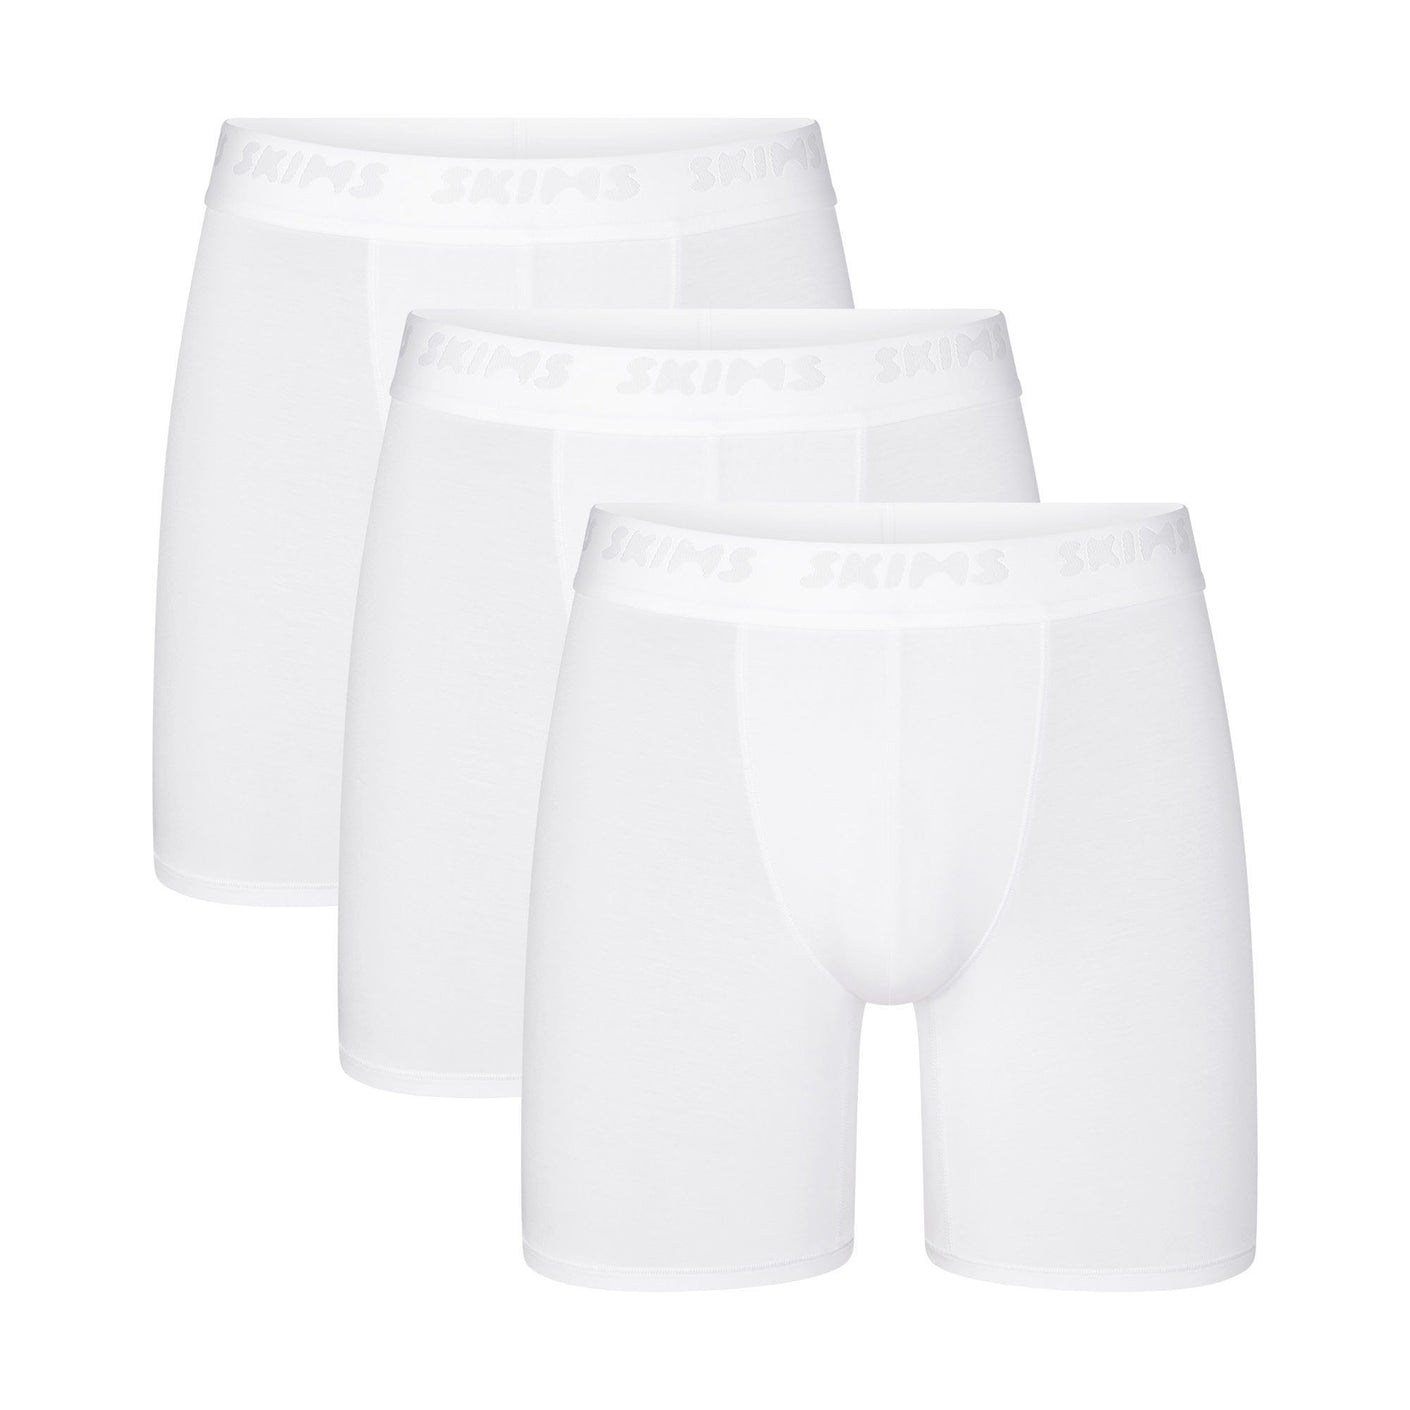 Tommy John, Intimates & Sleepwear, Nwt New Tommy John White Cool Cotton  Thong Panties Size Large